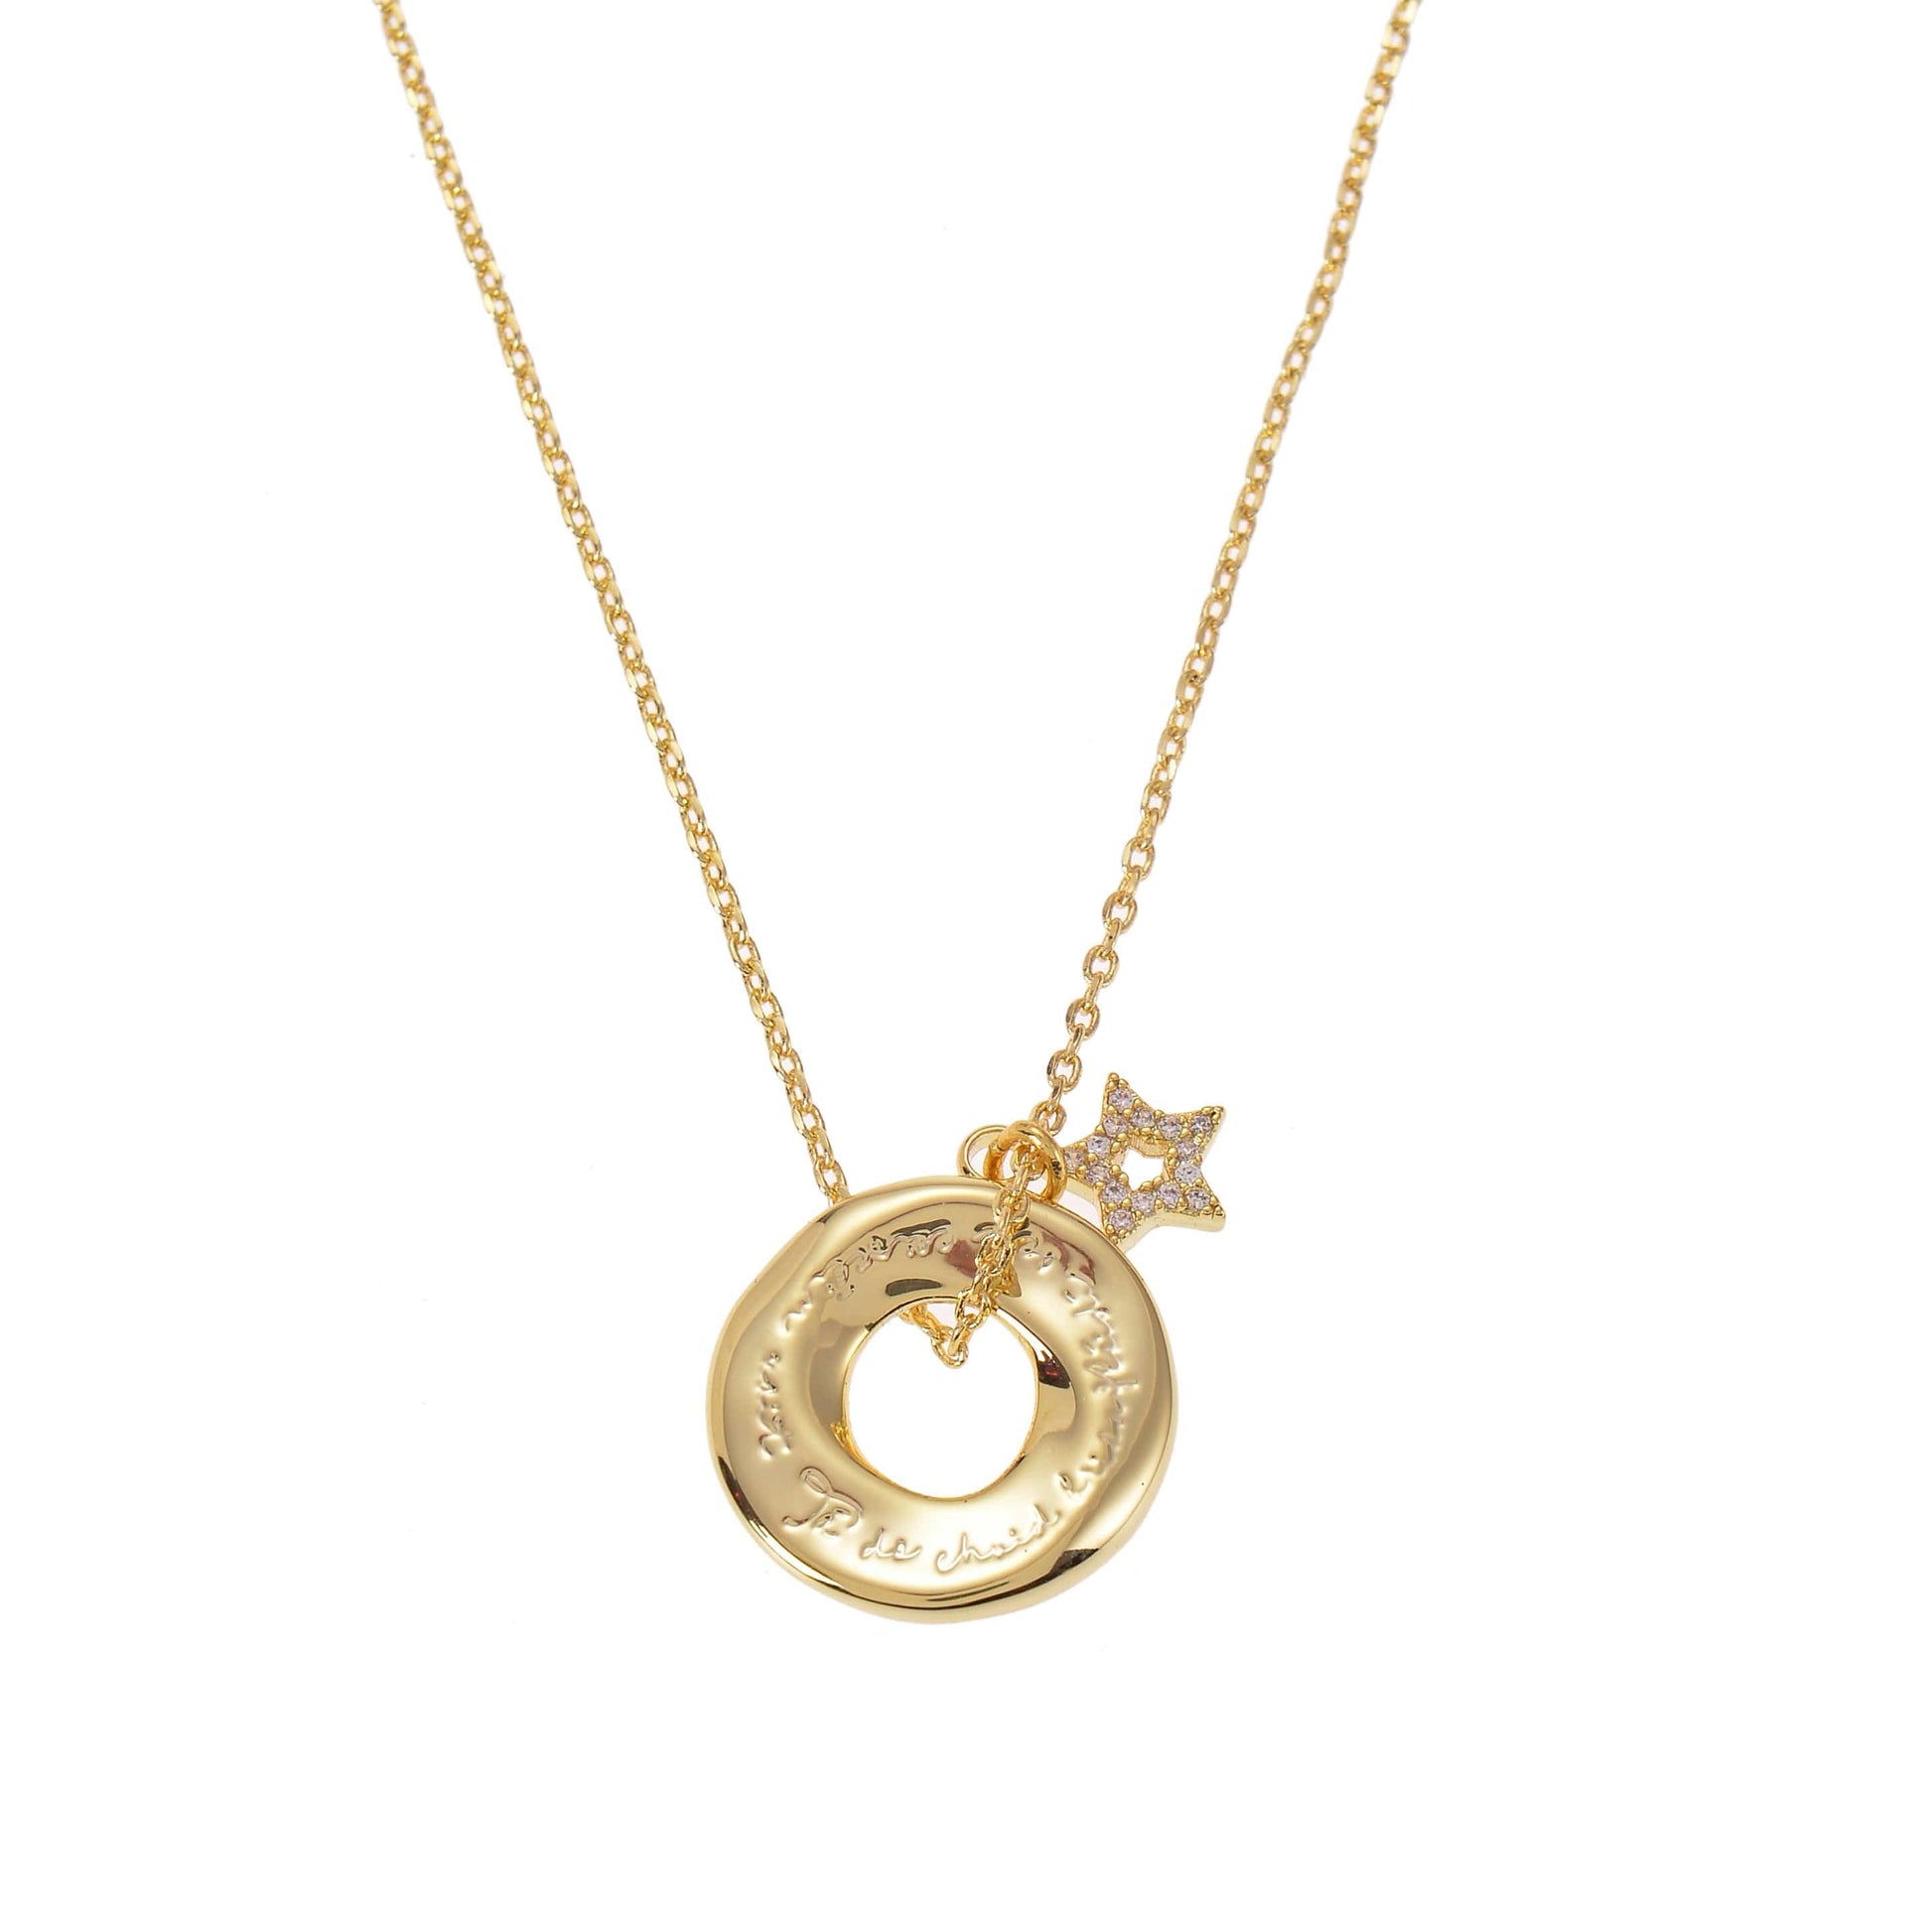 Irish/ Gaeilge Irish quote gold necklace with petite diamante star